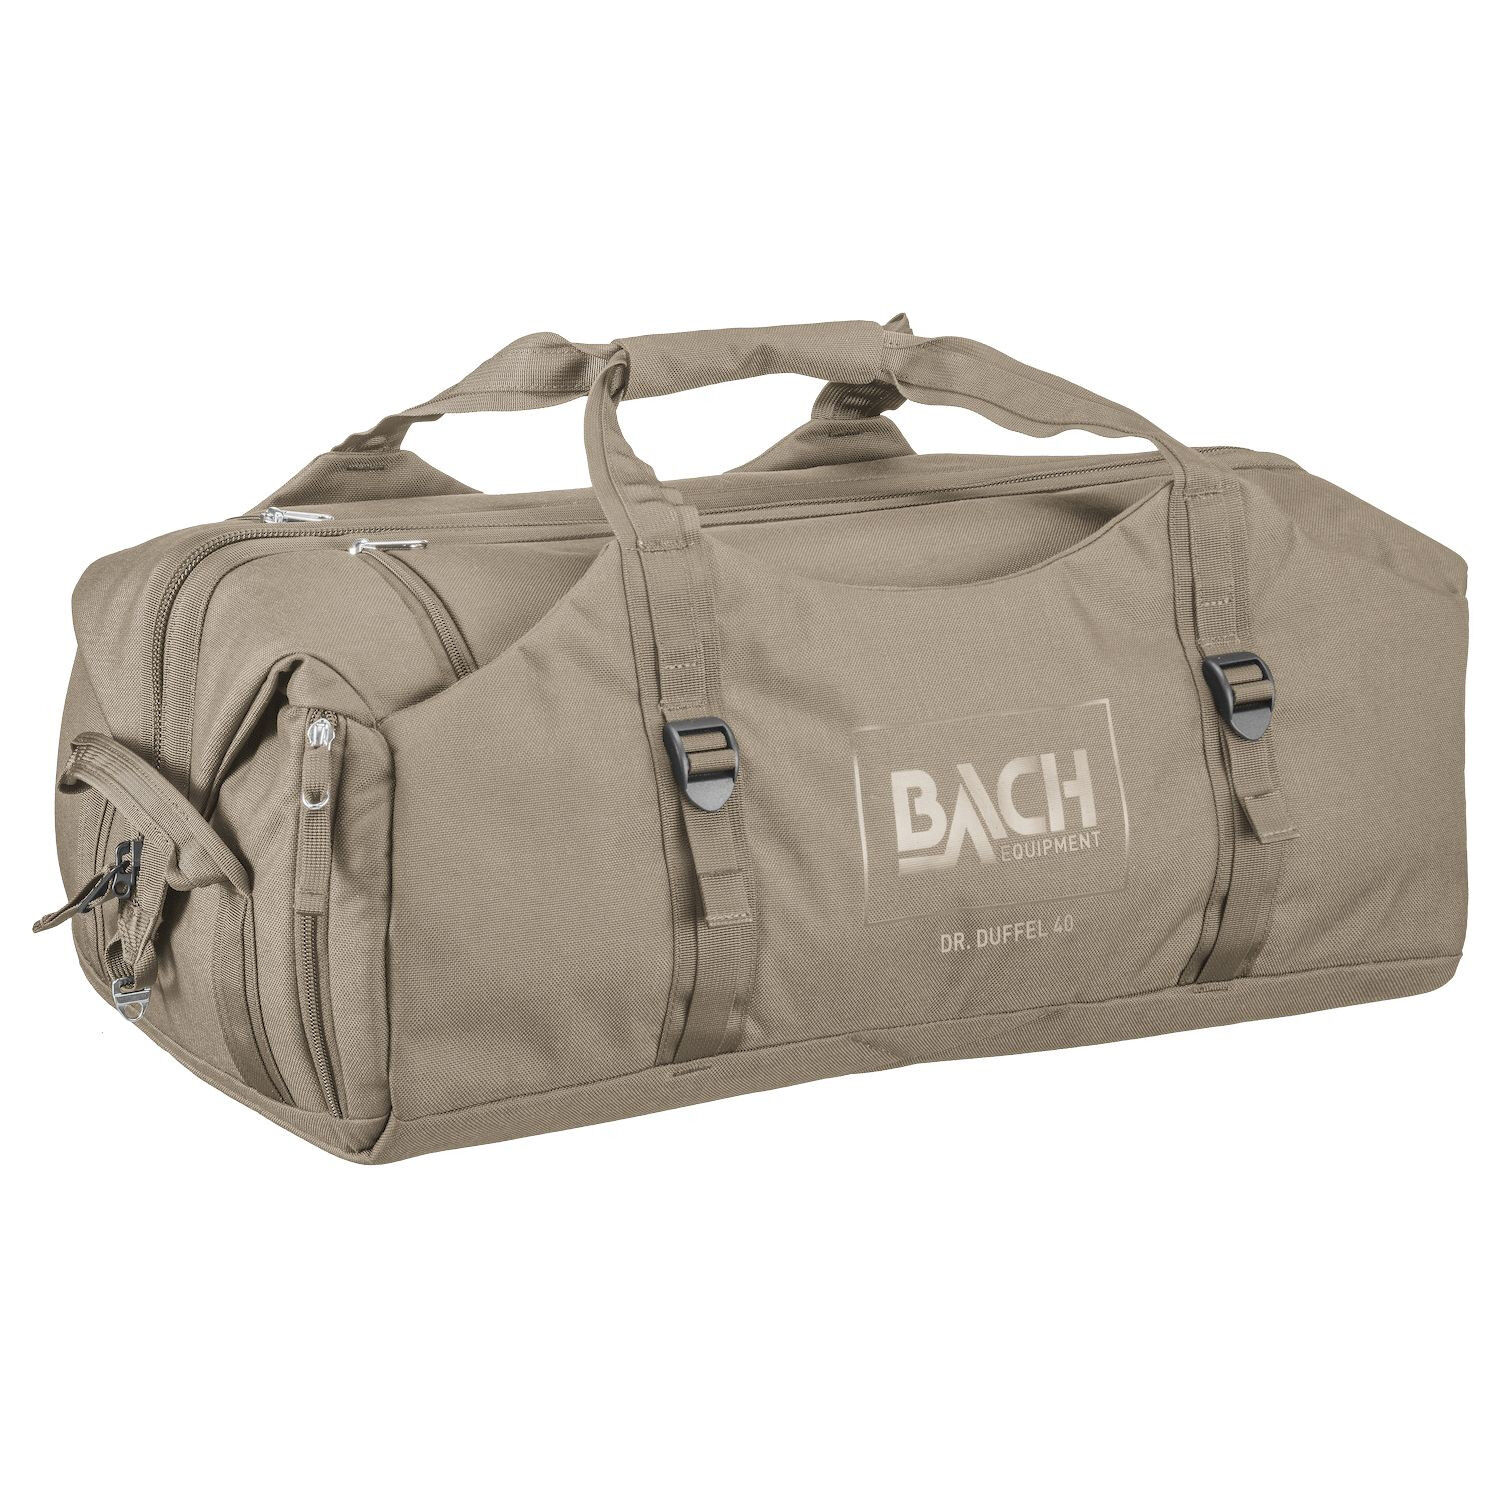 Bach Dr. Duffel 40 - Travel bag